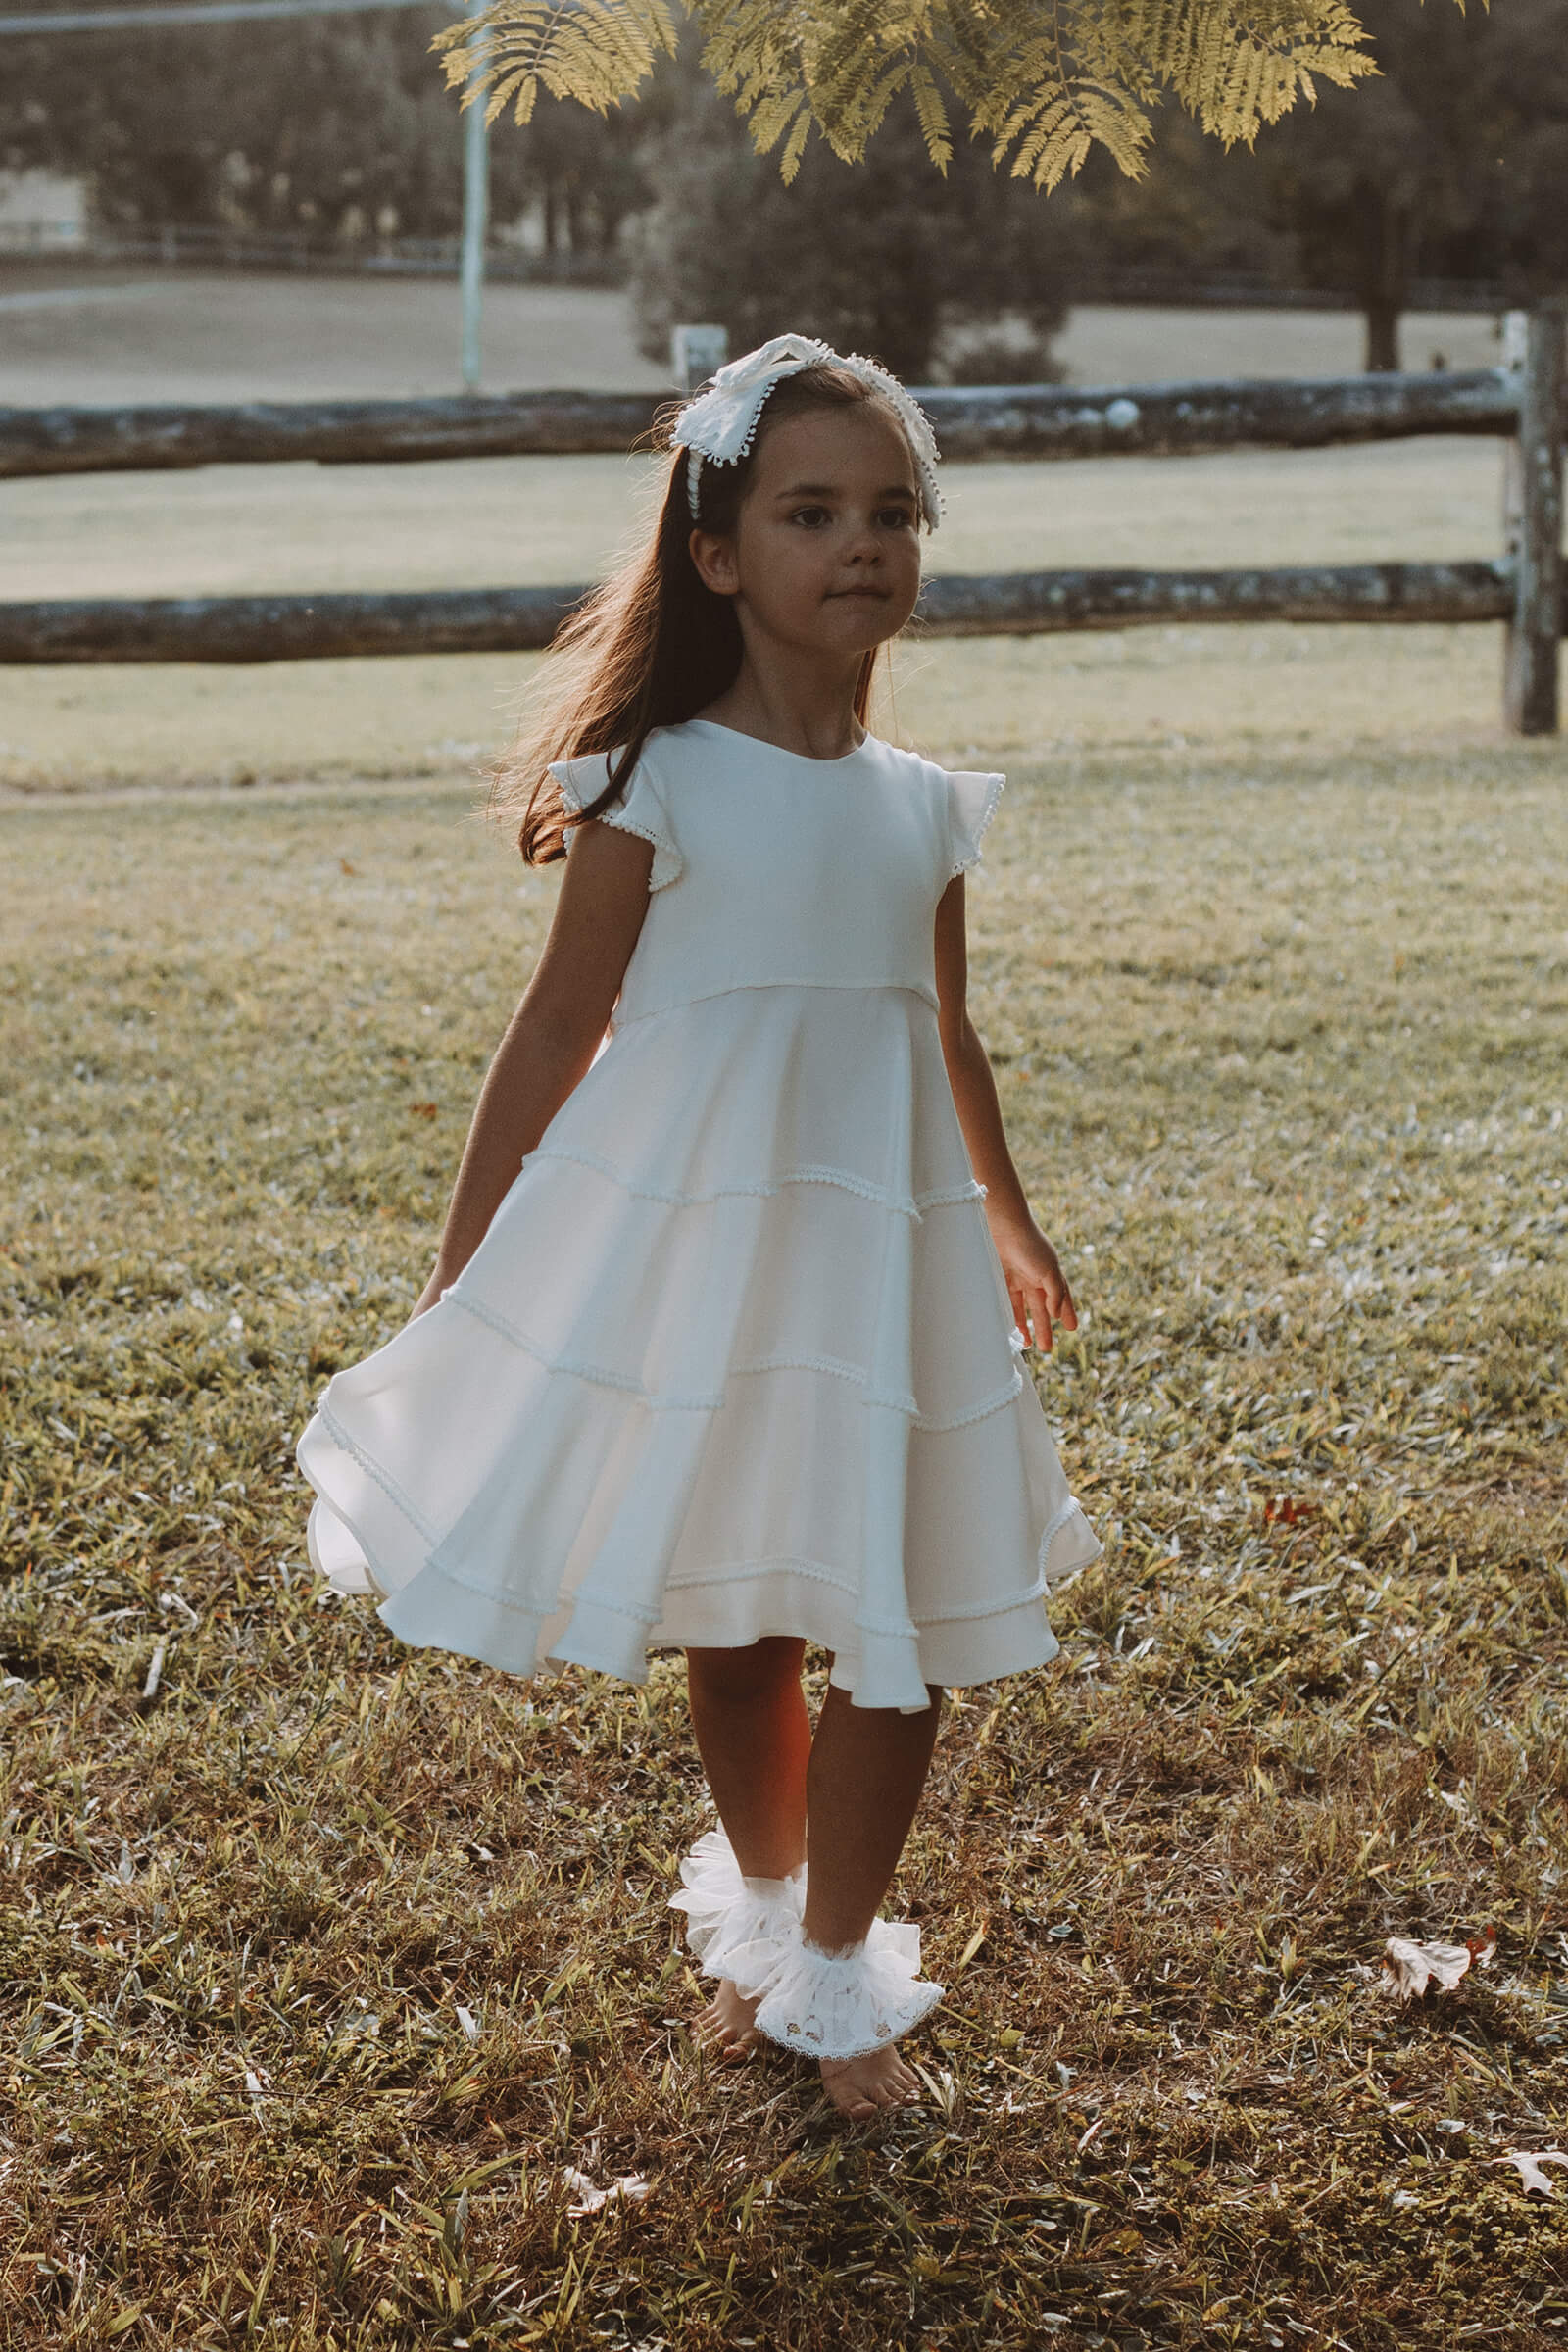 little girl dress